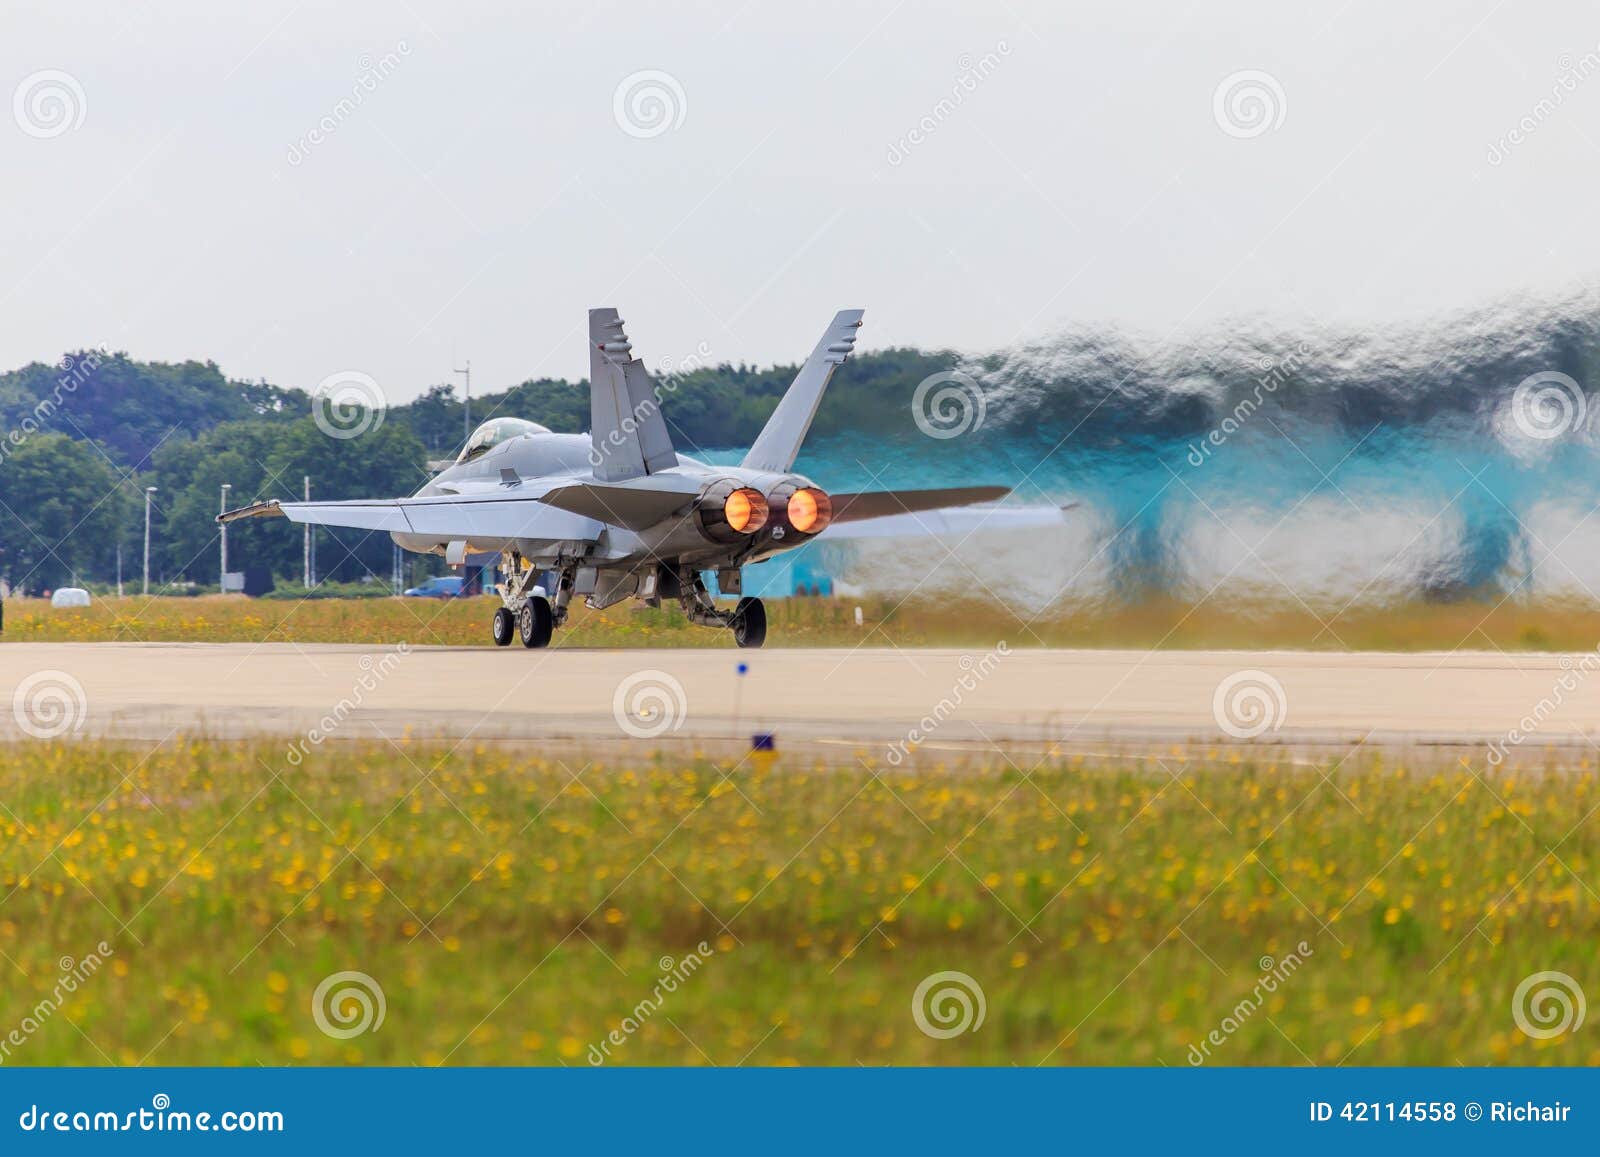 fighter jet with afterburner